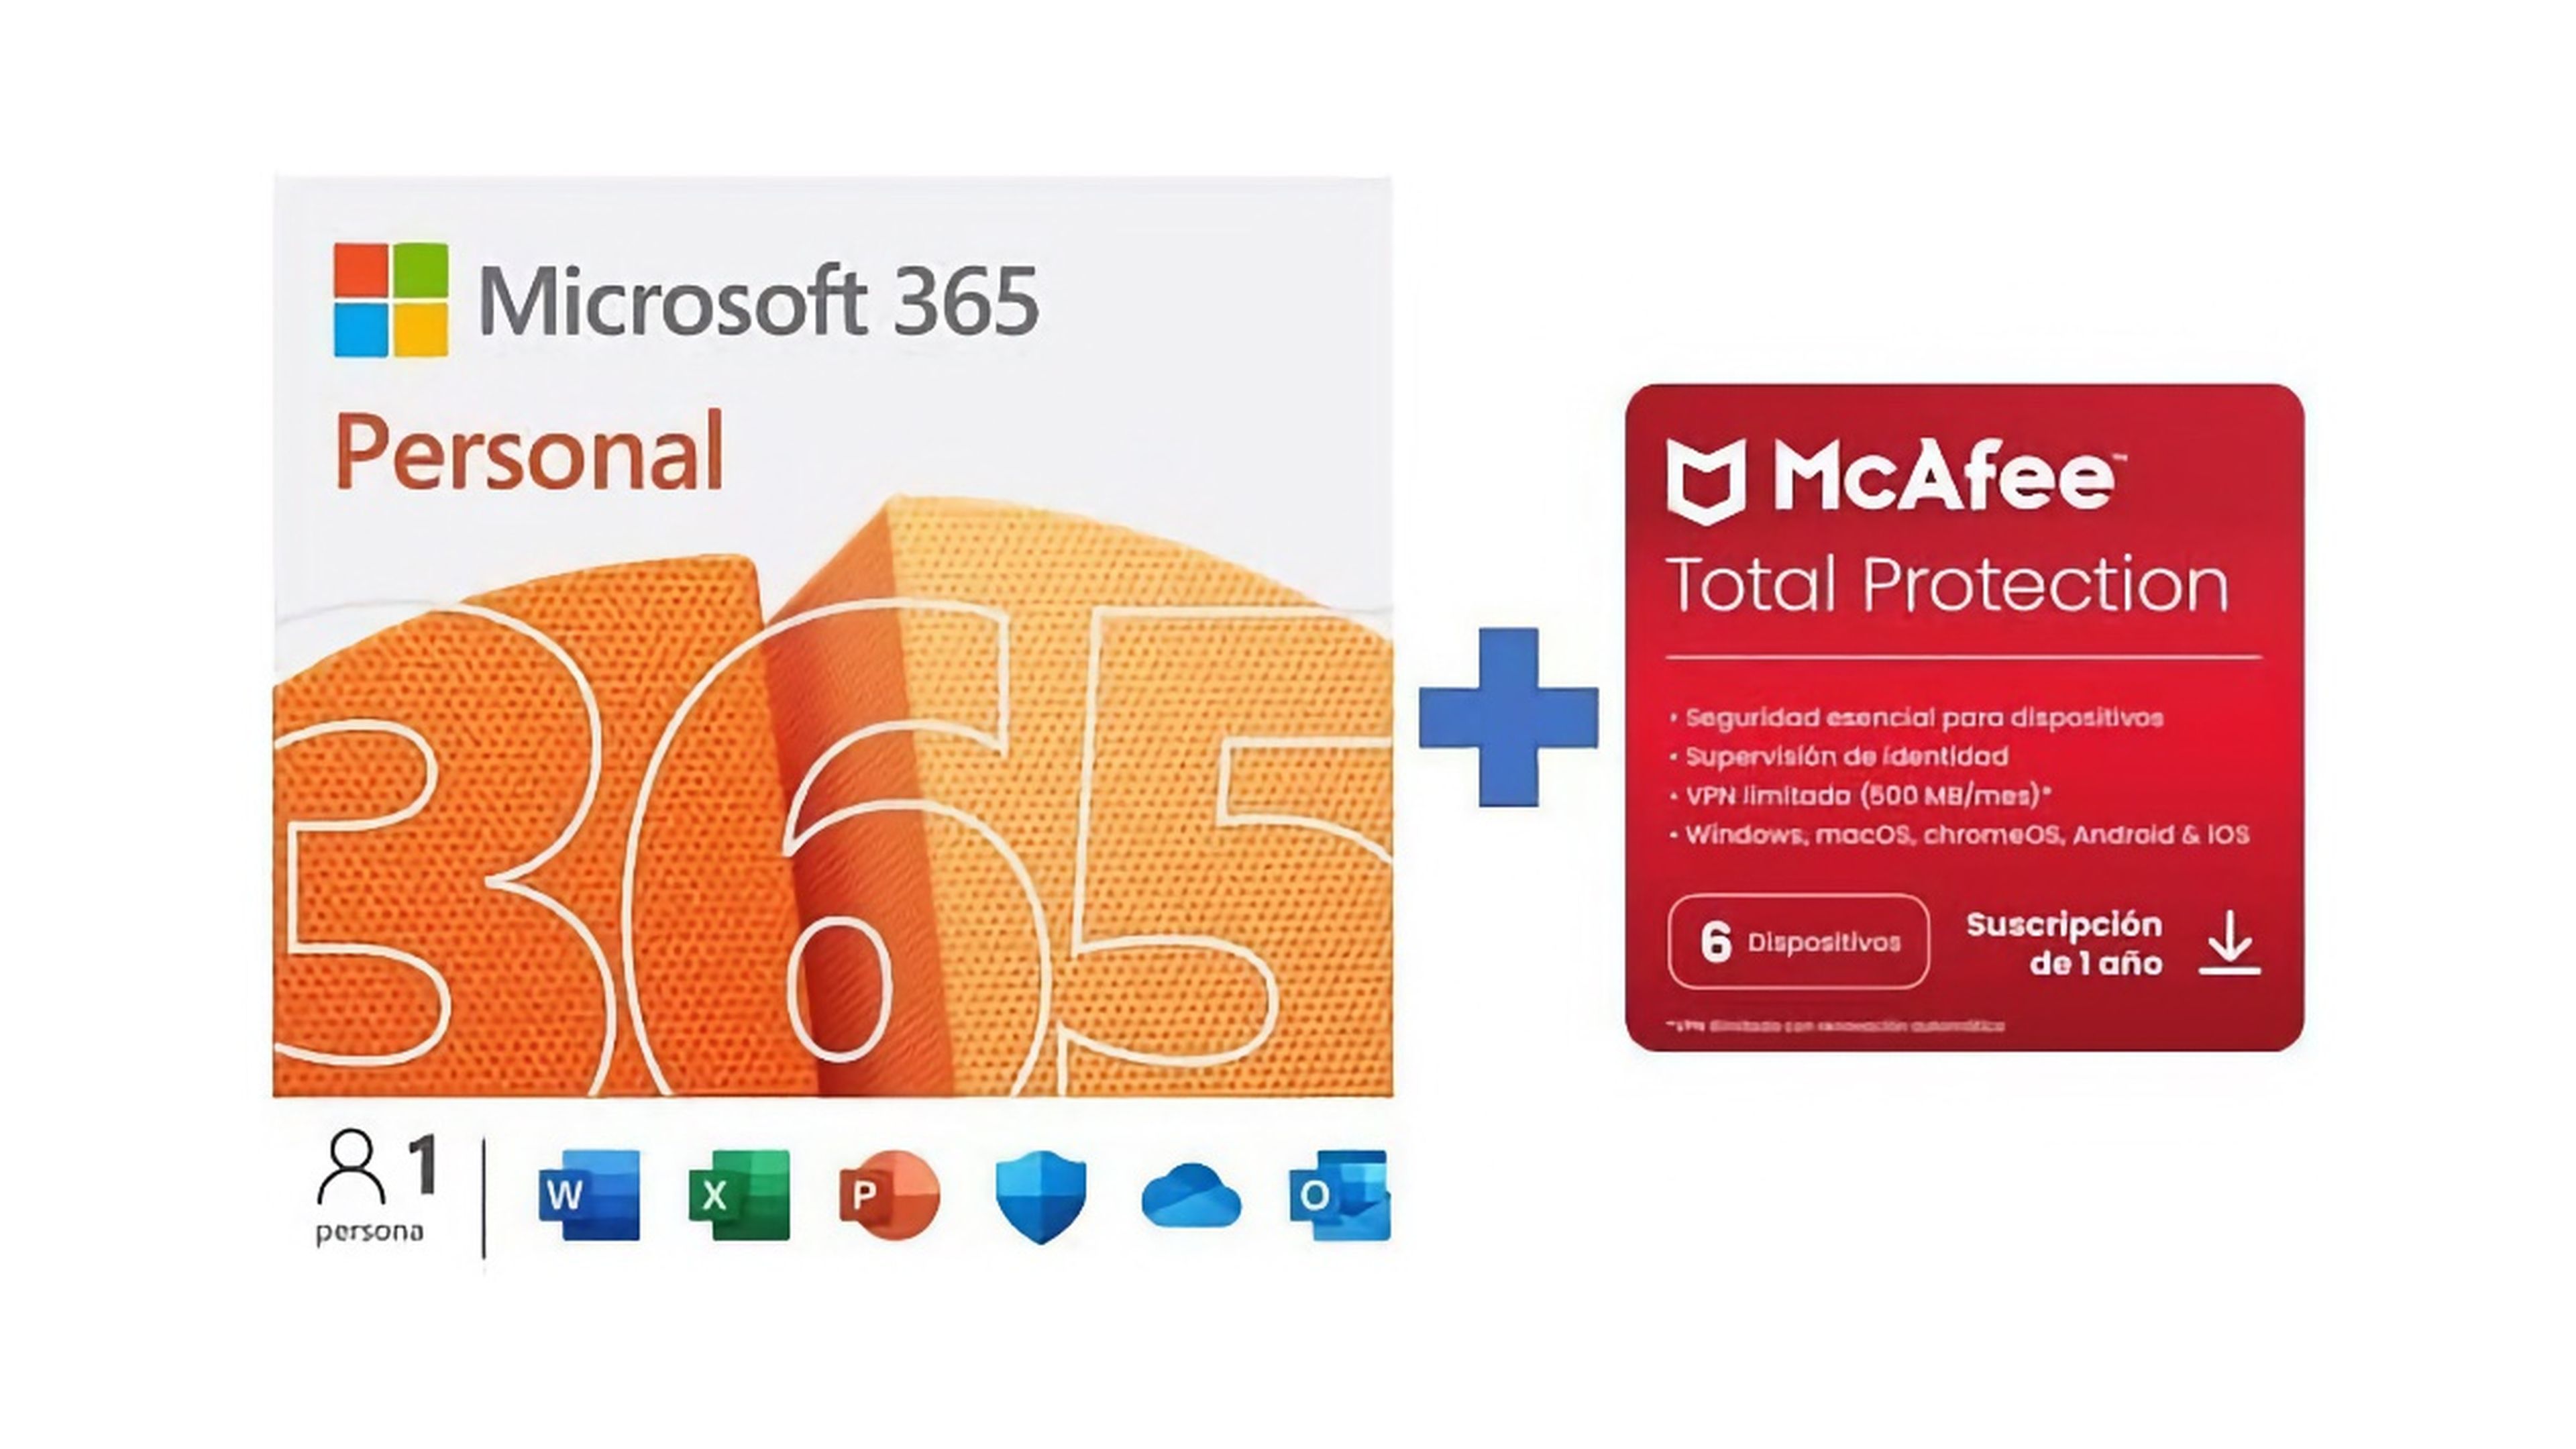 Microsoft 365 and McAfee